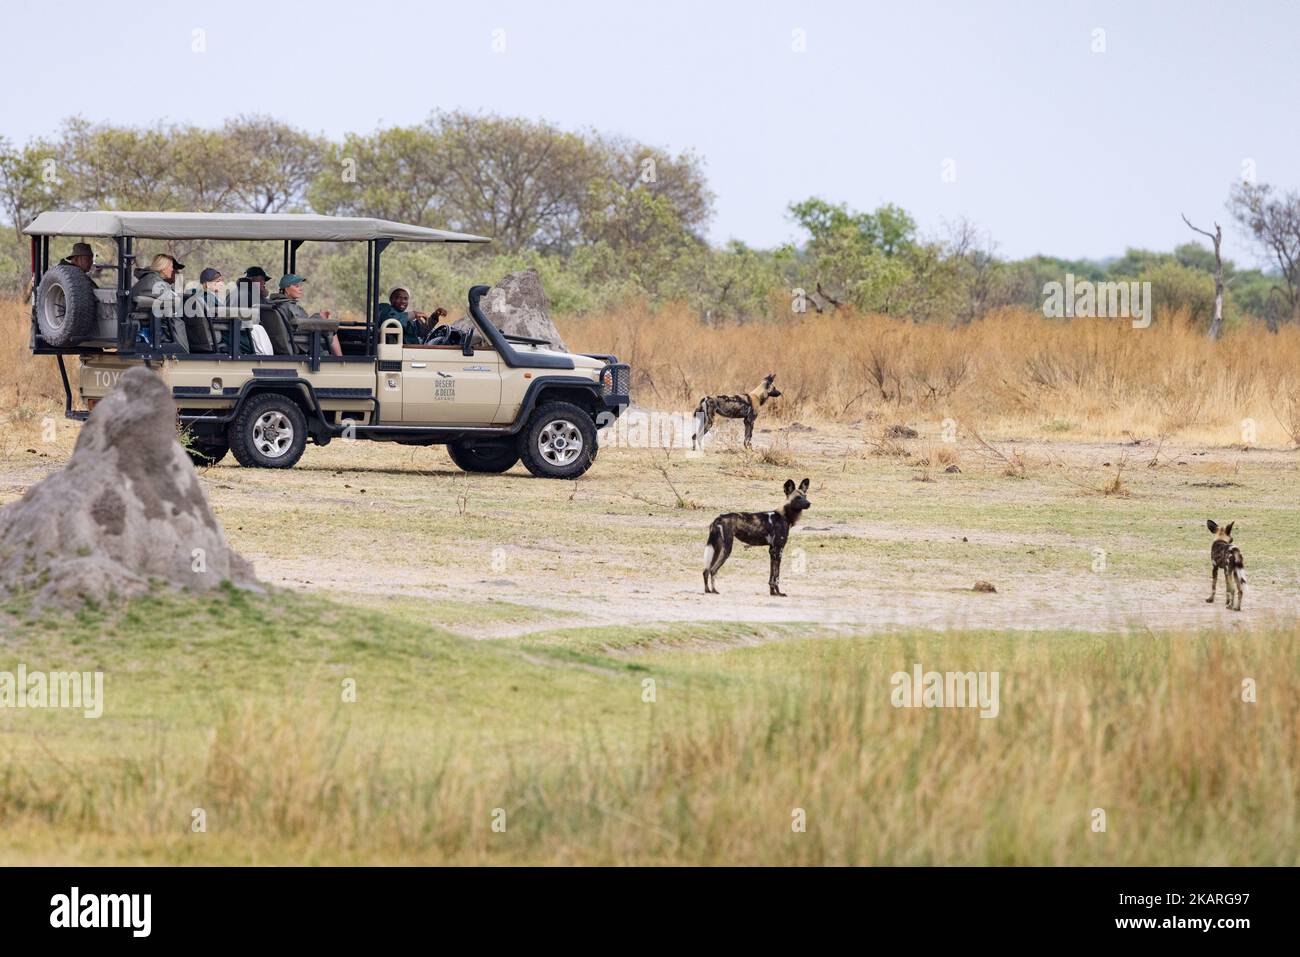 Jeep safari Africa - people watching African Wild Dogs, an endangered species, Moremi Game Reserve, Okavango Delta, Botswana.  African travel. Stock Photo